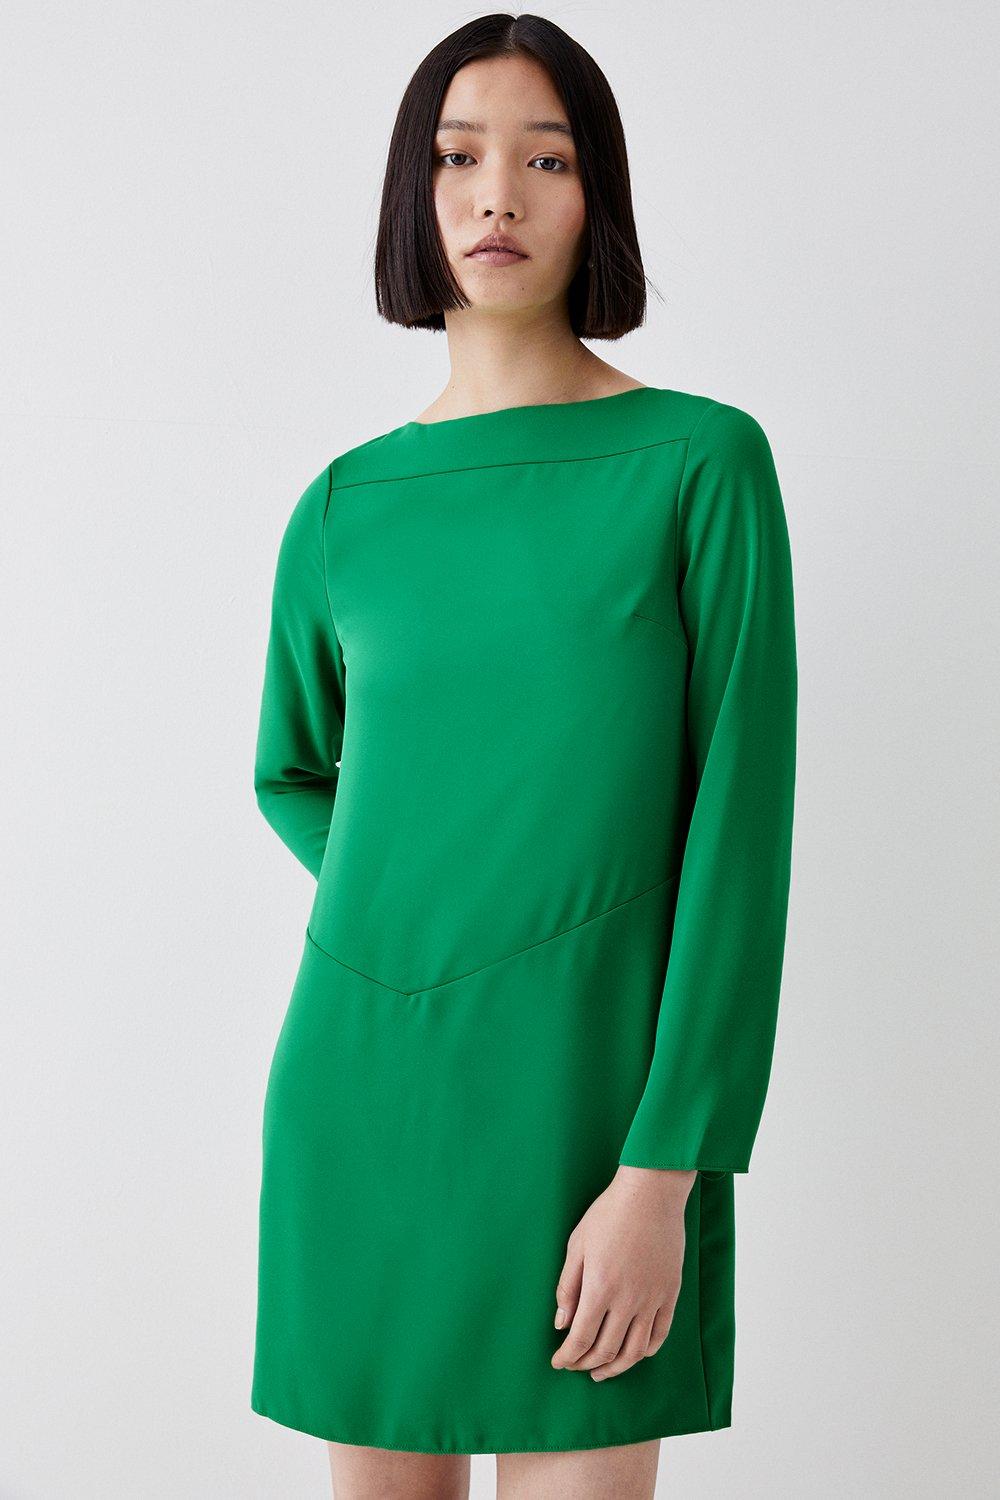 Seam Detail Crepe Shift Dress - Bright Green